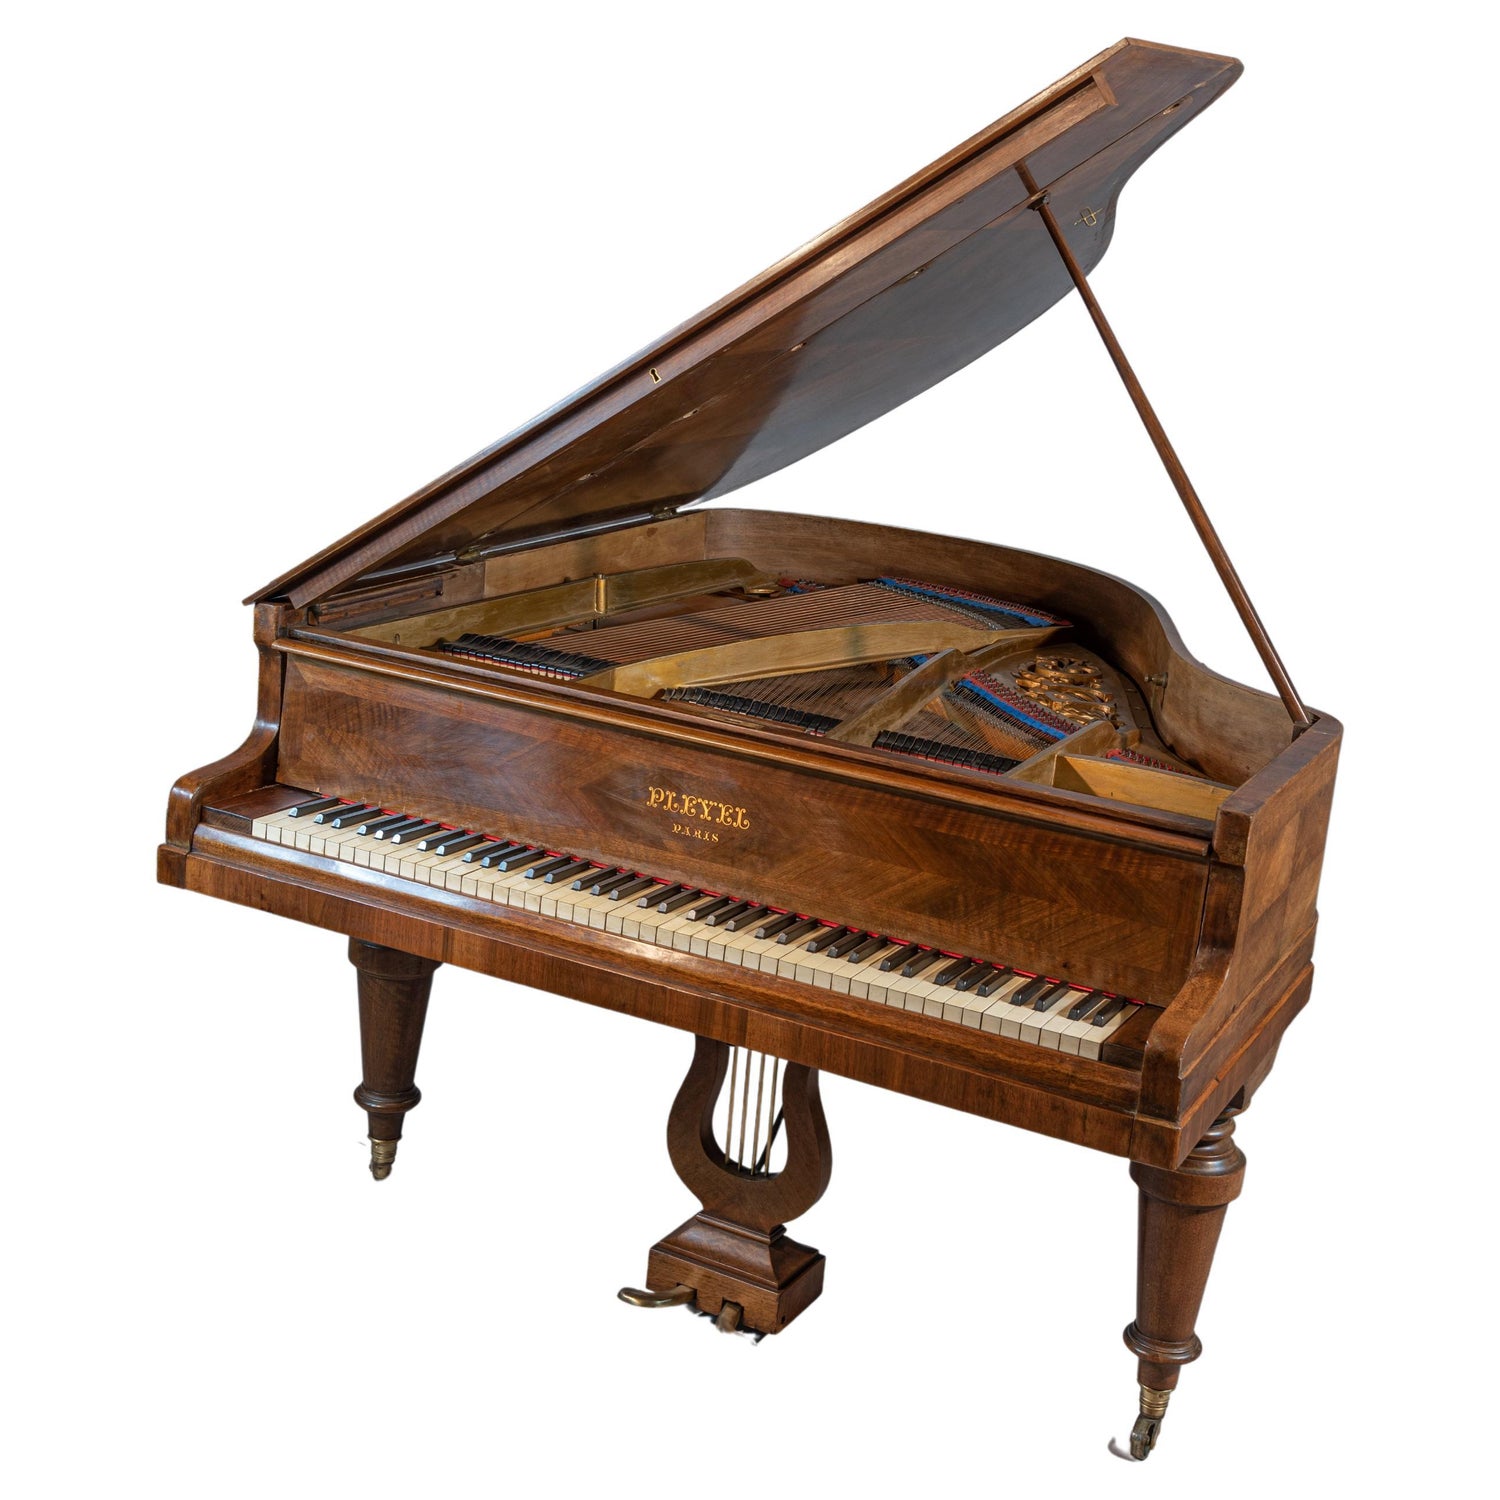 Pianos à queue - Pianos - Instruments de musique - Produits